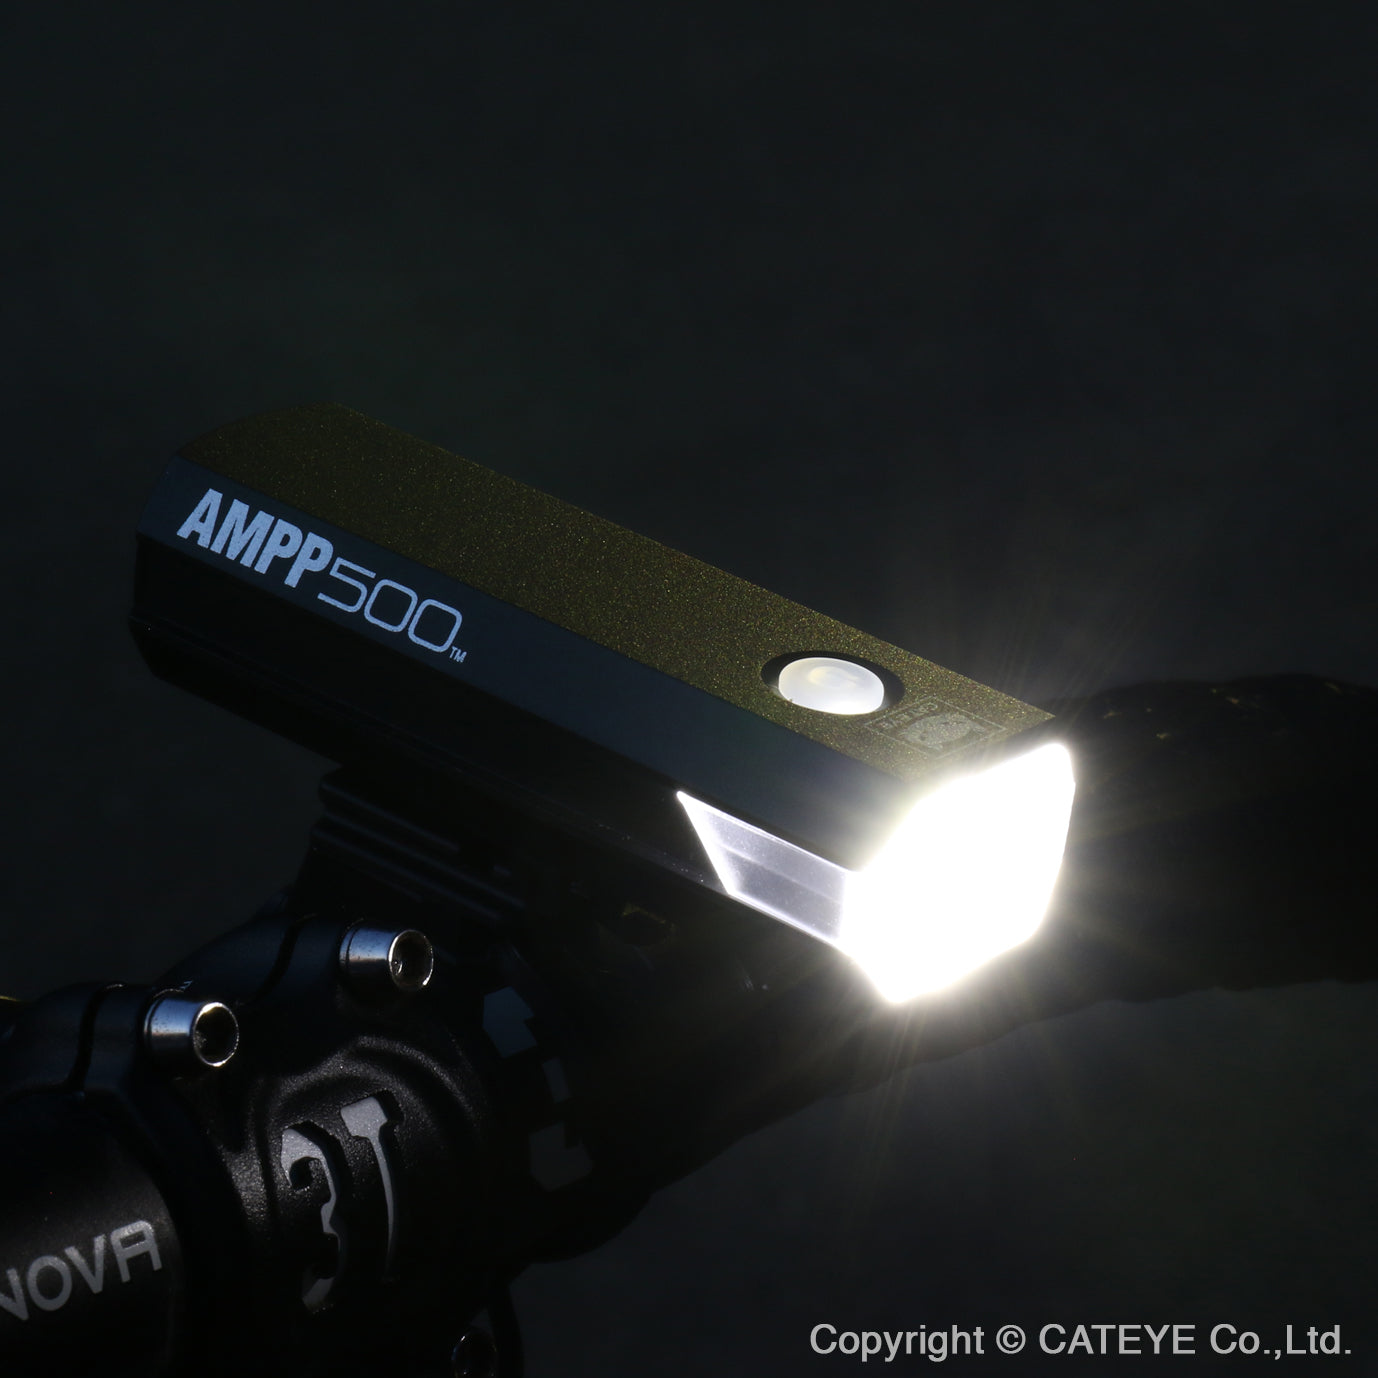 CATEYE USB 叉電前燈~AMPP500~HL-EL085RC (散裝)/ CATEYE USB RECHARGEABLE FRONT LIGHT~AMPP500~HL-EL085RC(OEM)